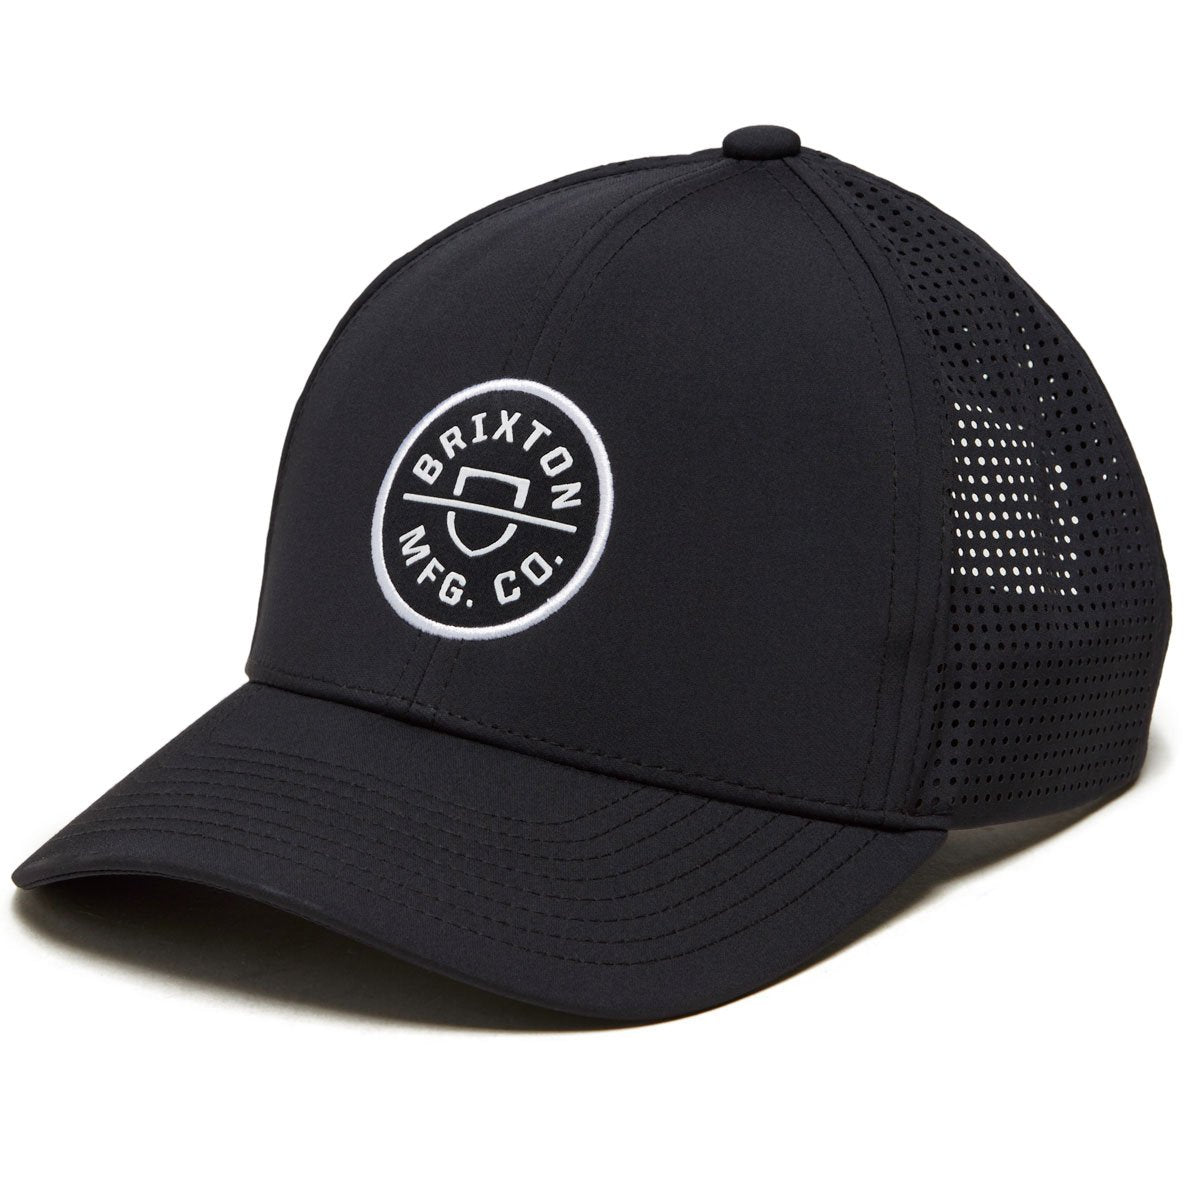 Brixton Crest X Mp Snapback Hat - Black image 1